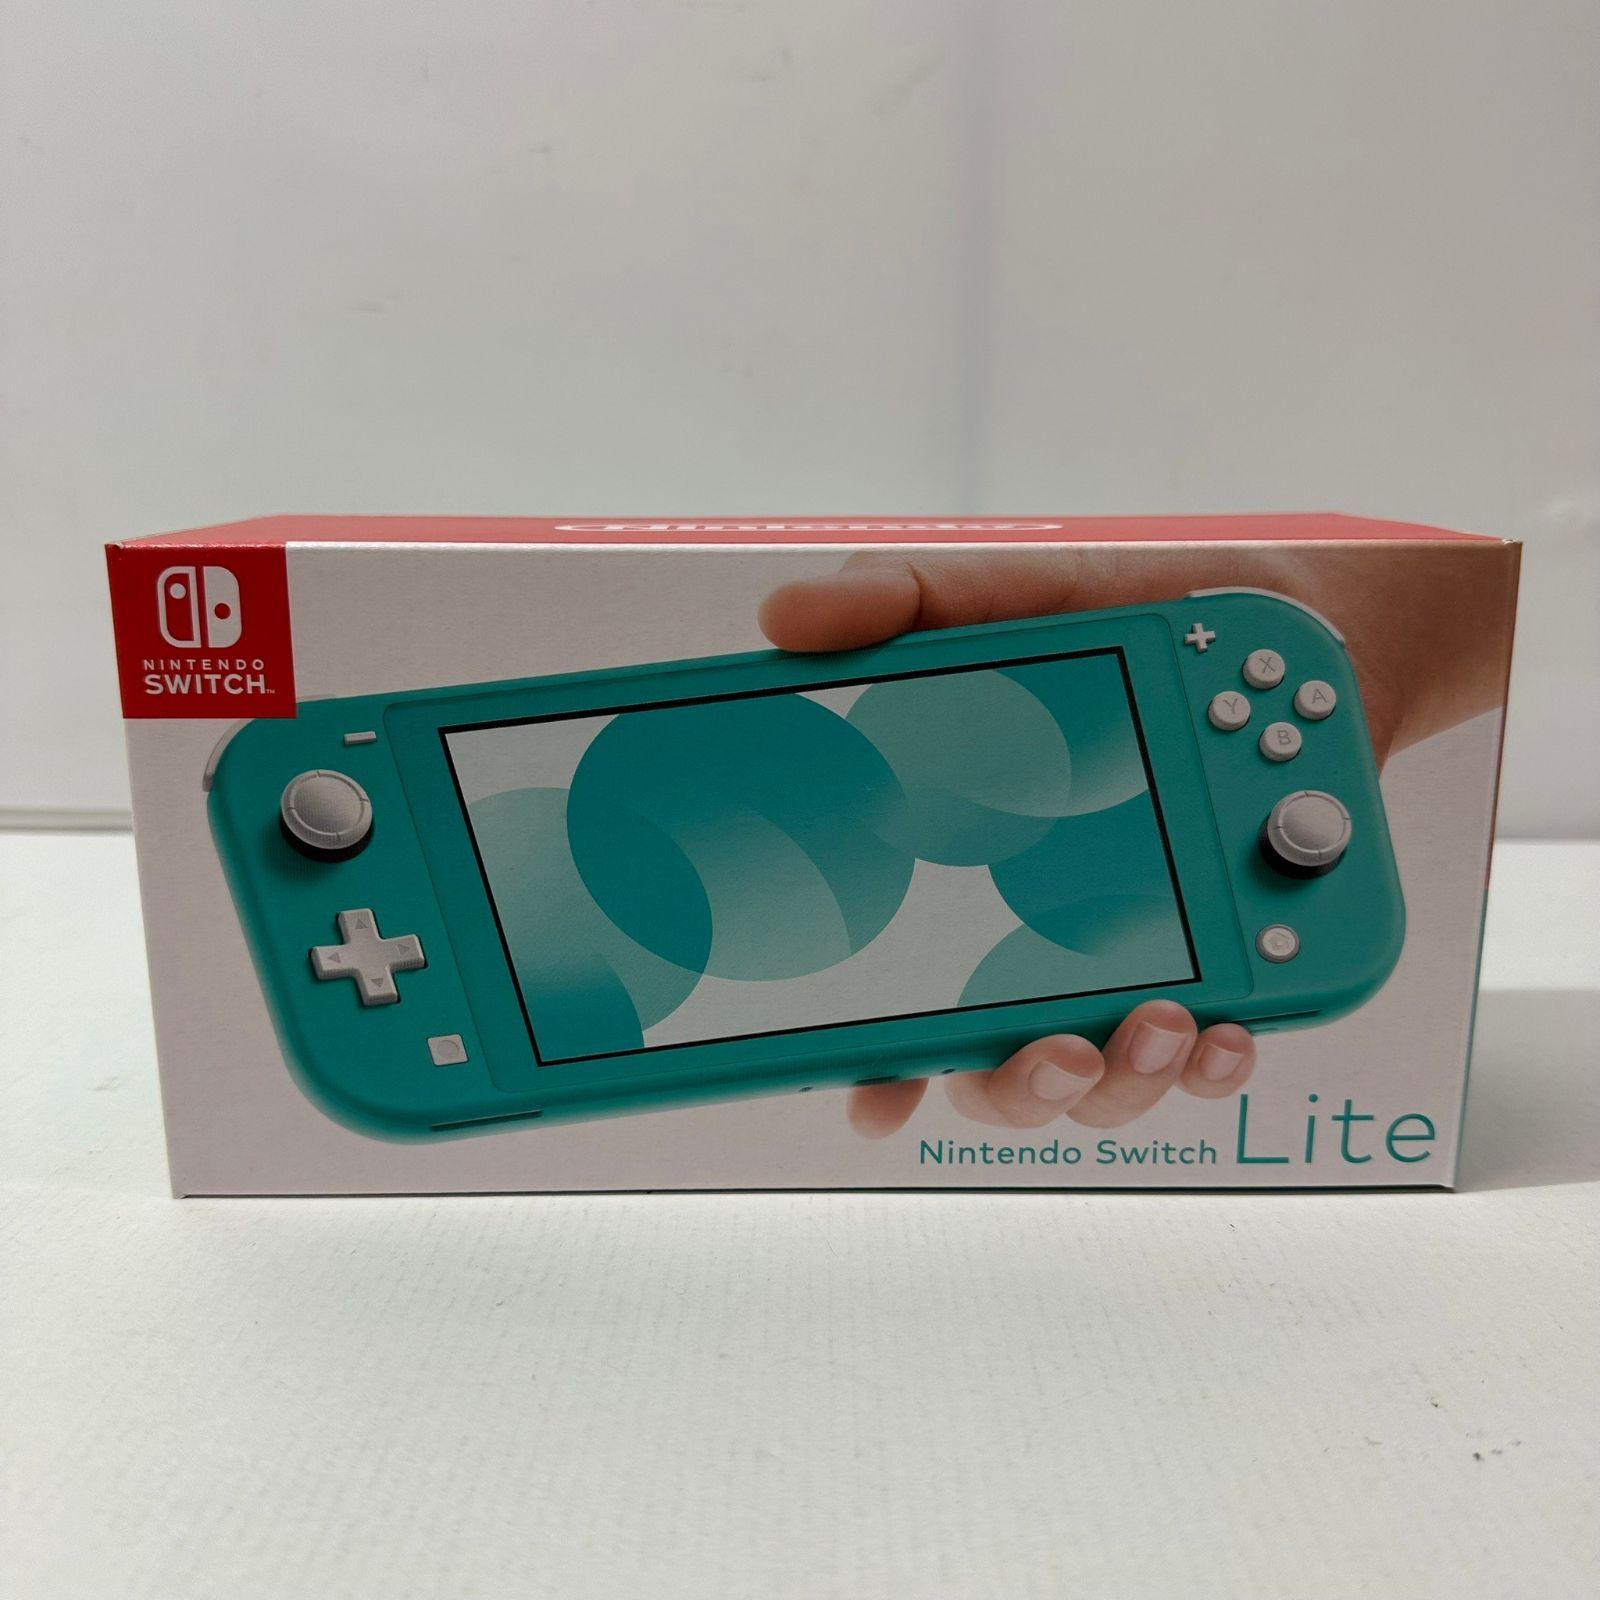 05m0598 【Nintendo Switch Lite】スイッチライト本体 ターコイズ 